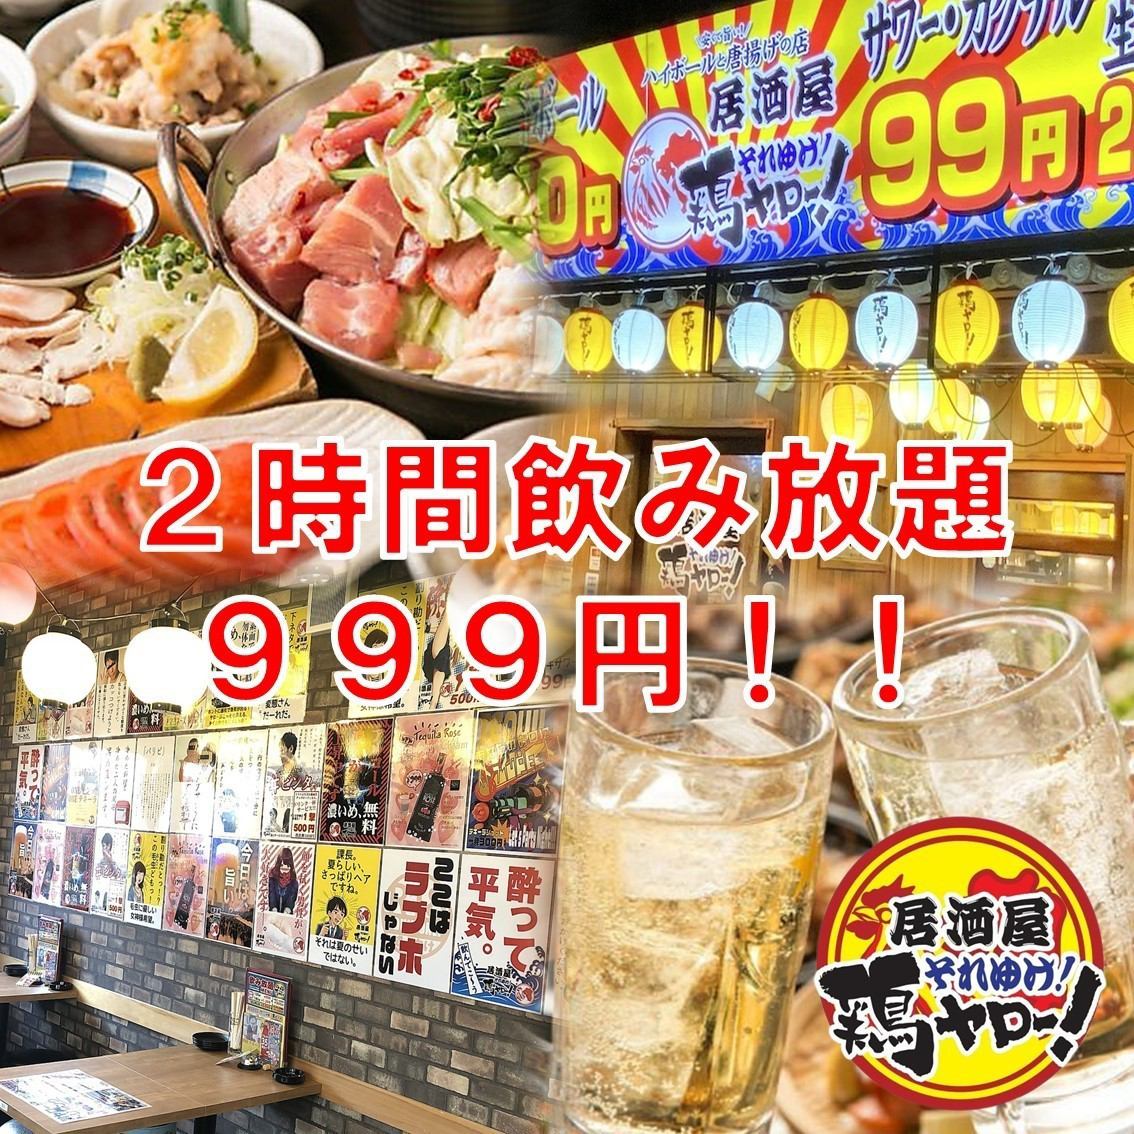 Kaku Highball 50日圓！酸酒、葡萄酒、軟性飲料99日圓！生啤酒299日圓